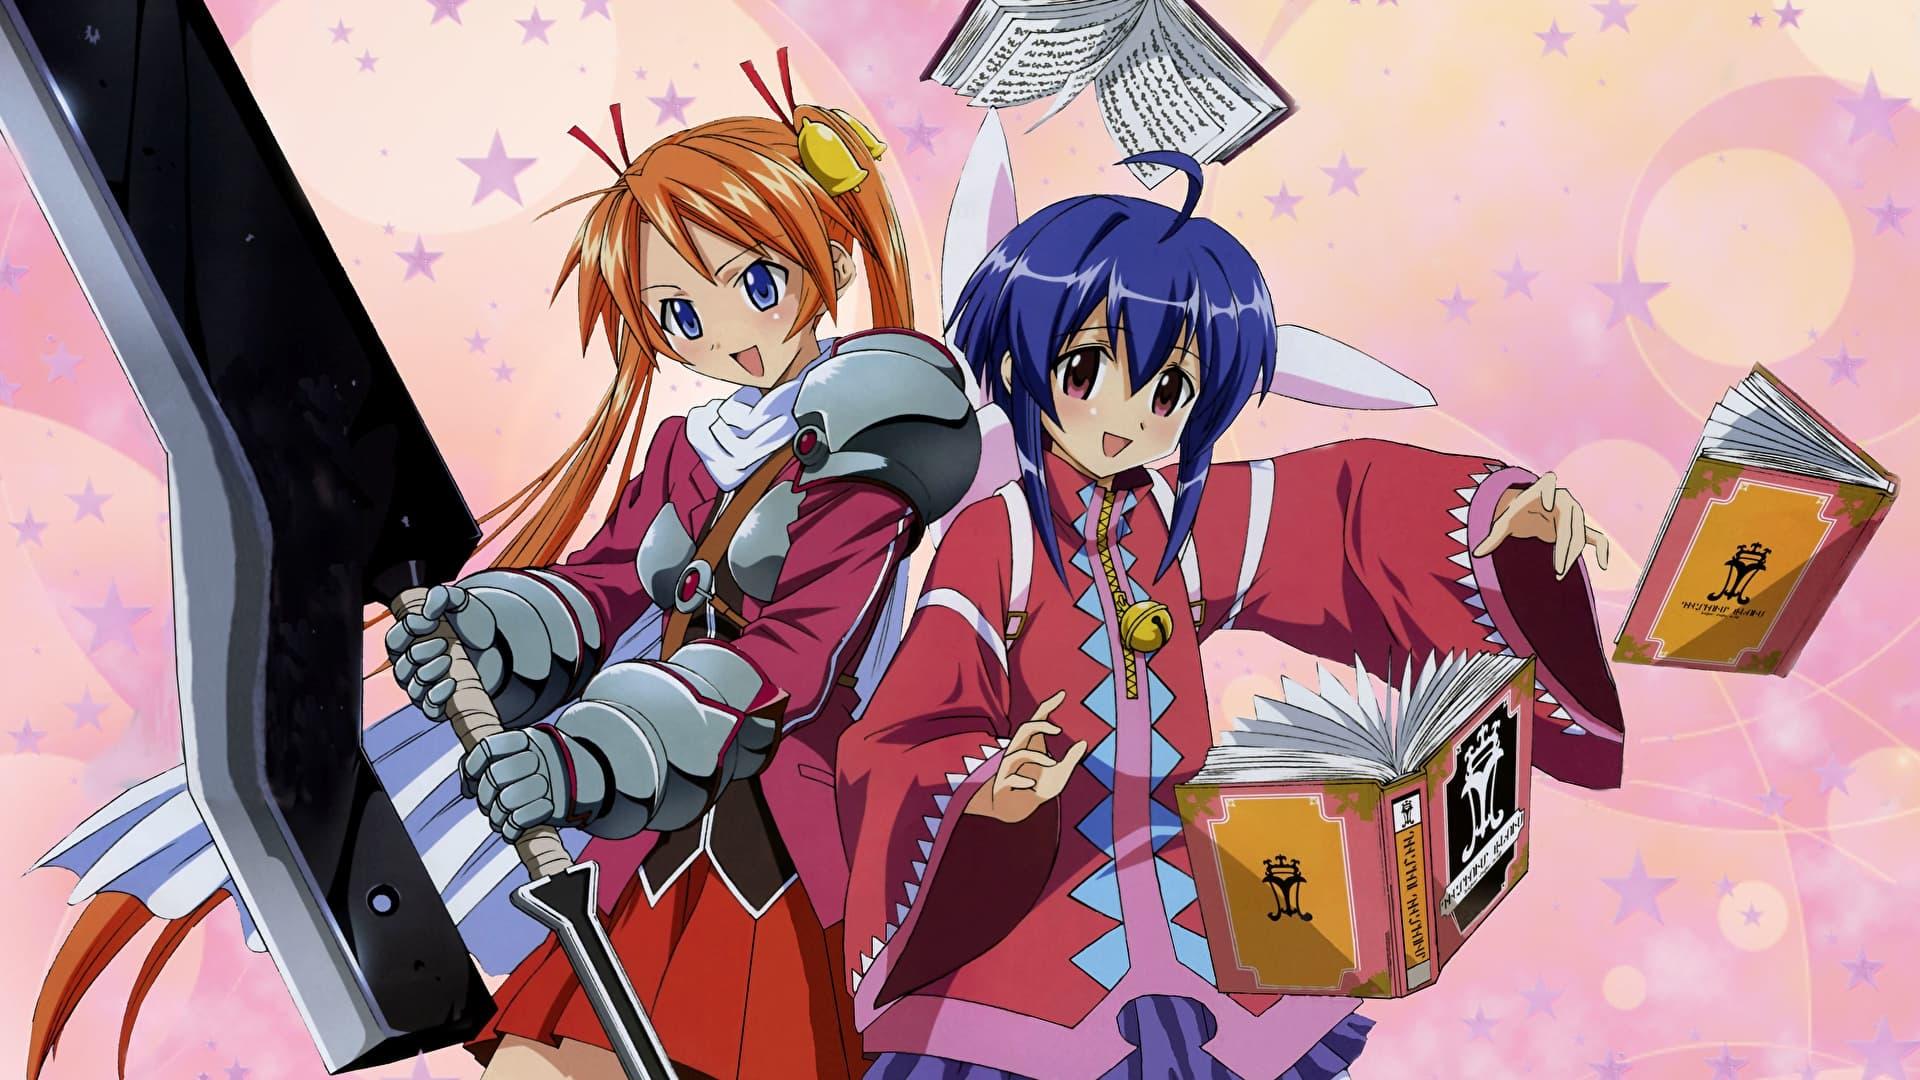 DVD Anime Magister Negi Magi Shiroki Tsubasa Ala Alba EPISODE 1-3 END JEWEL  CASE | eBay